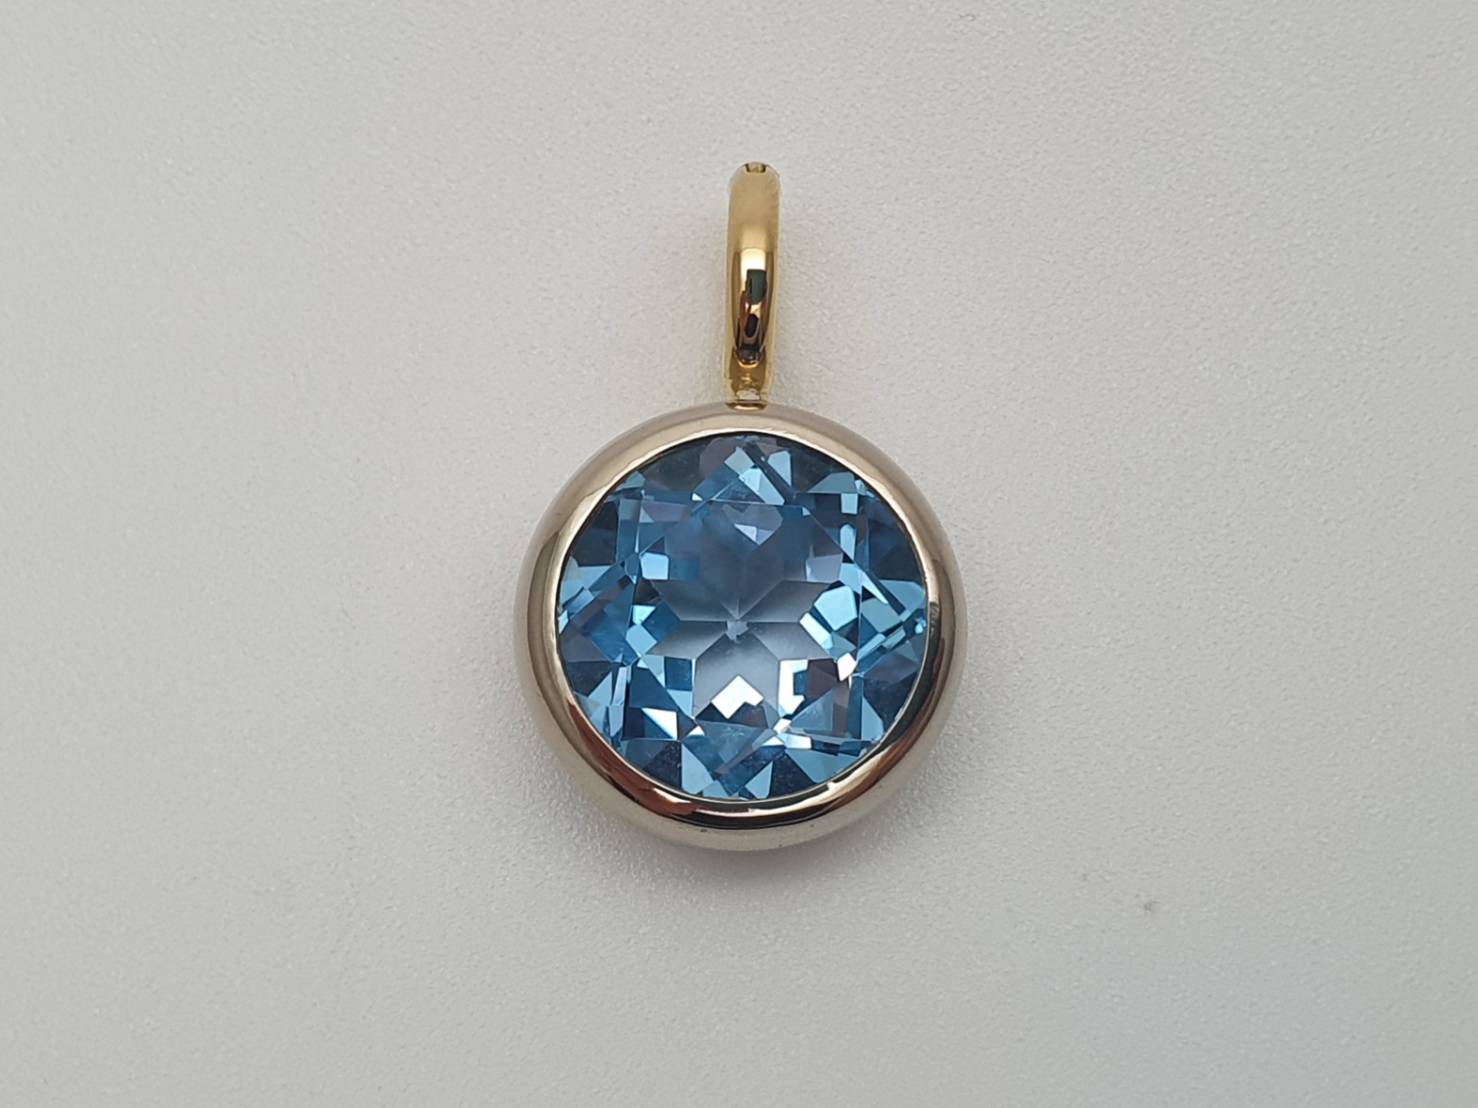 Blue Topaz pendant